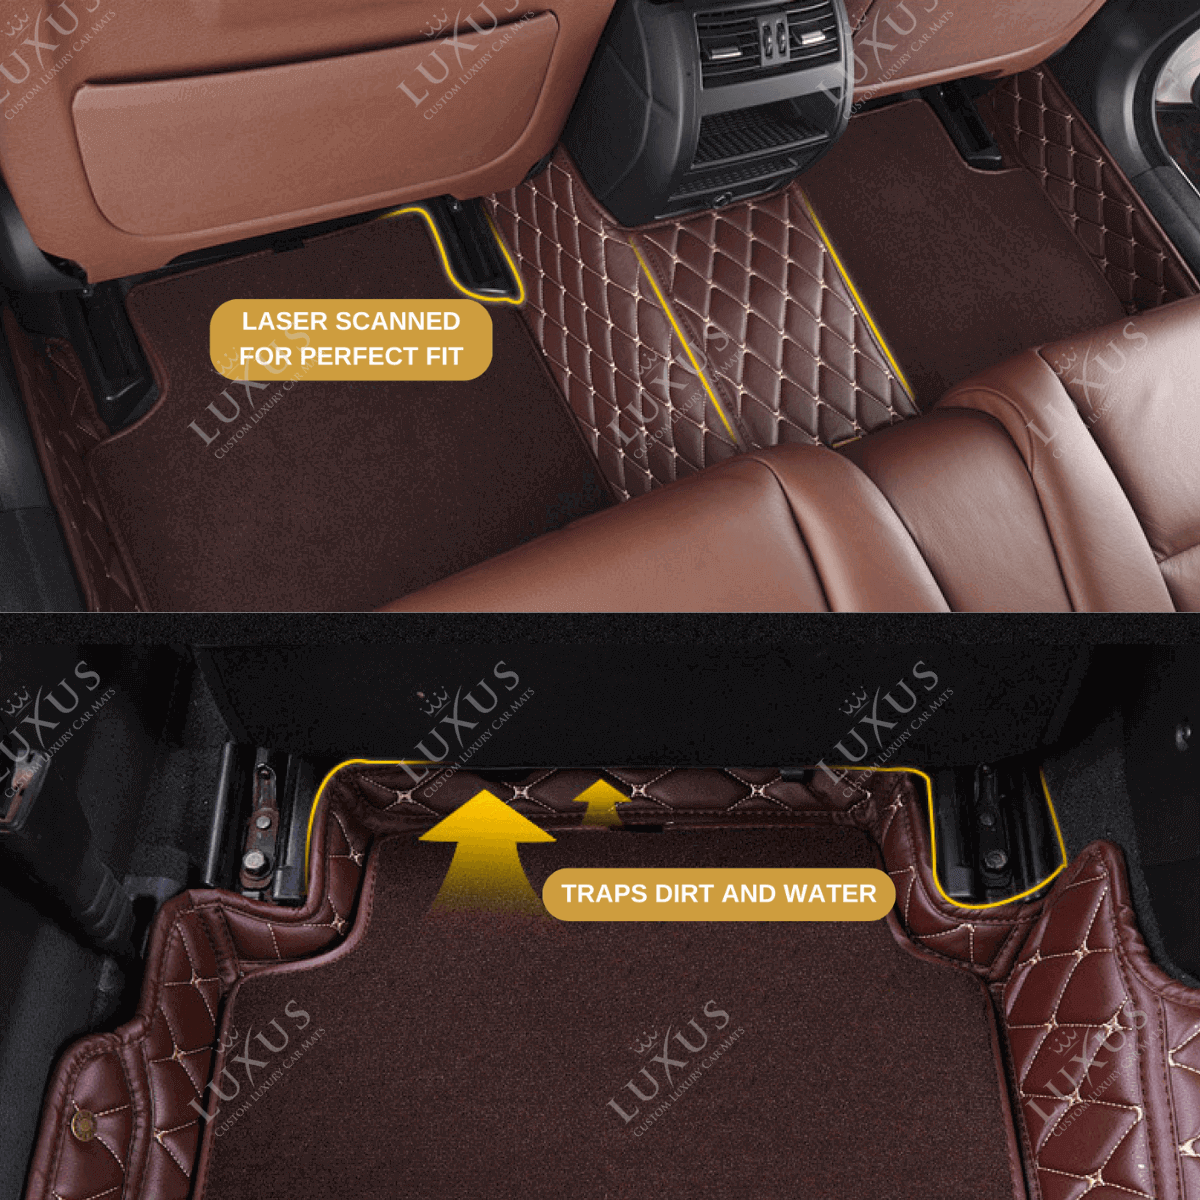 Chocolate Brown Honeycomb Base & Black Top Carpet Double Layer Luxury Car Mats Set